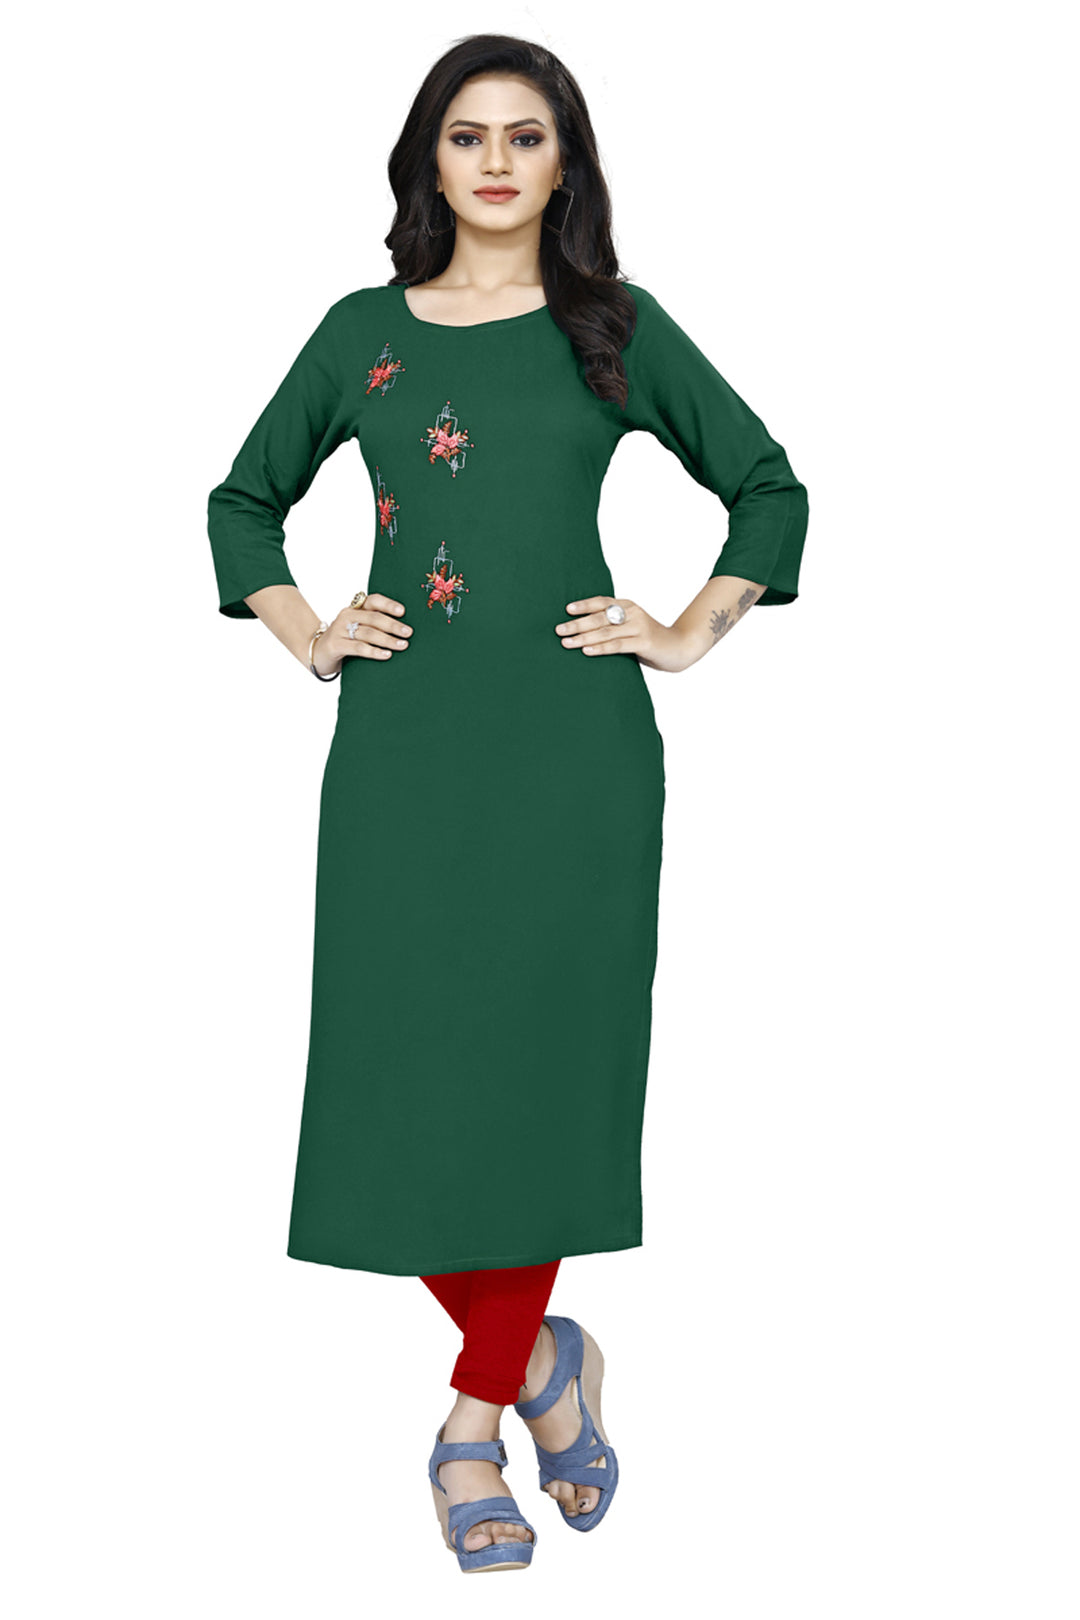 Designer Green Rayon kurti with stylish embroidery